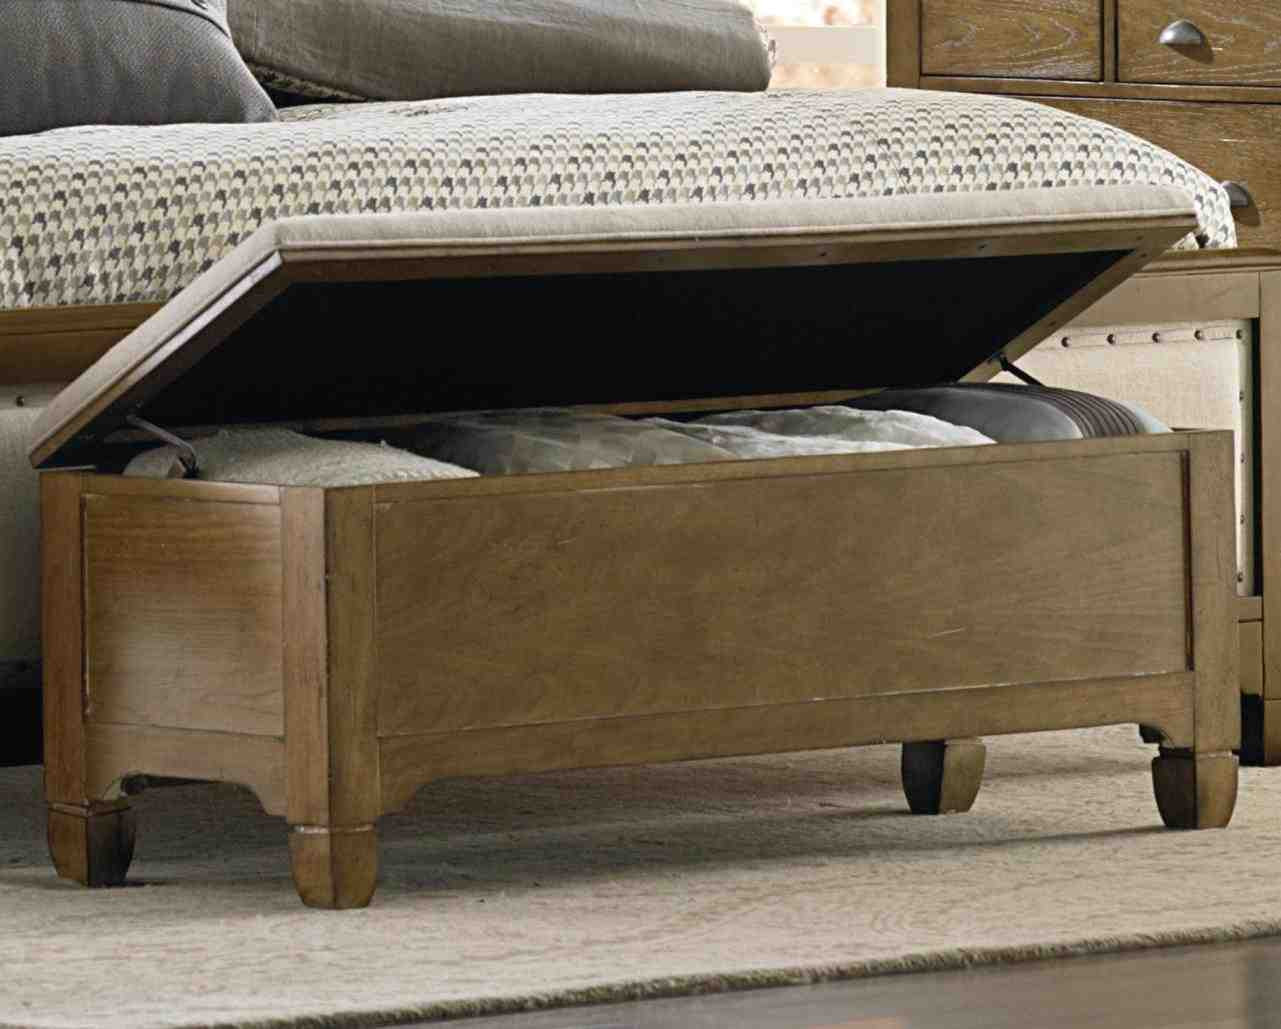 Bedroom Storage Bench Seat
 Bedroom Storage Bench Seat Home Furniture Design